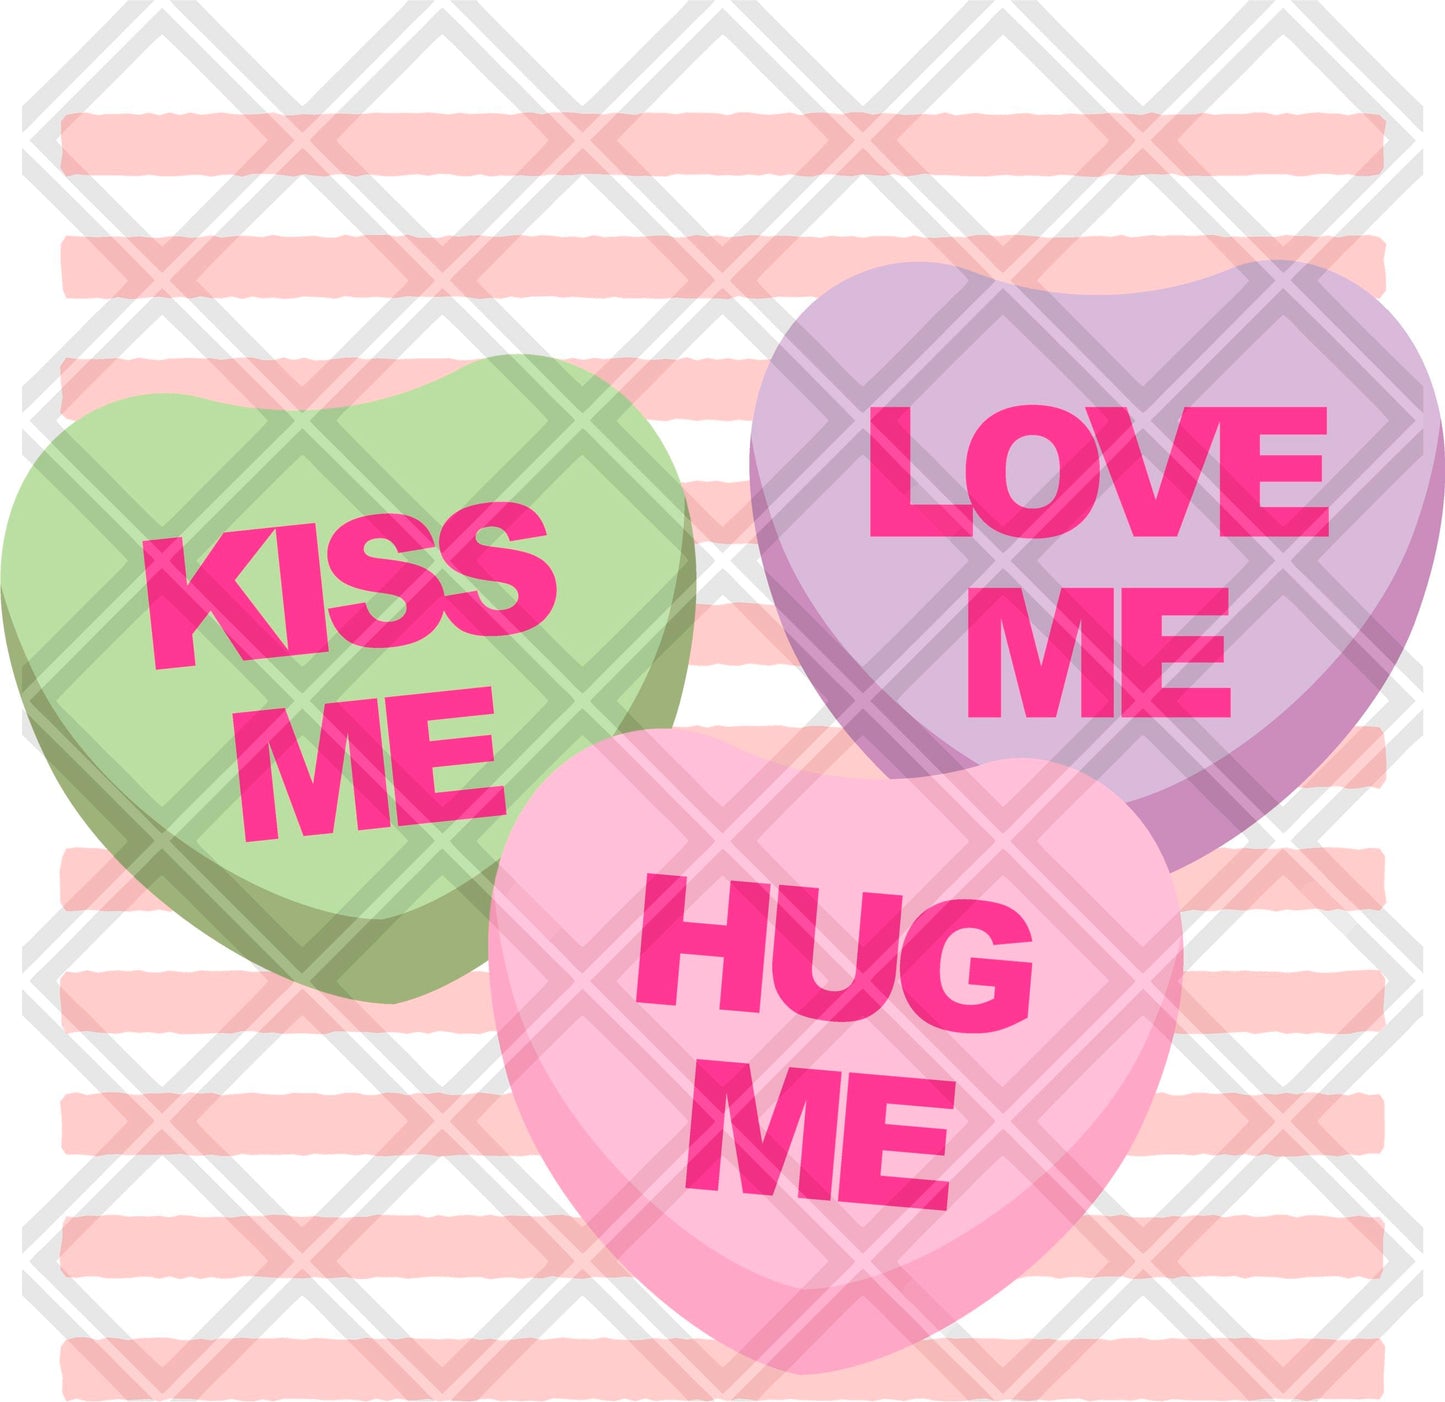 LOVE ME kiss me hug me hearts png Digital Download Instand Download